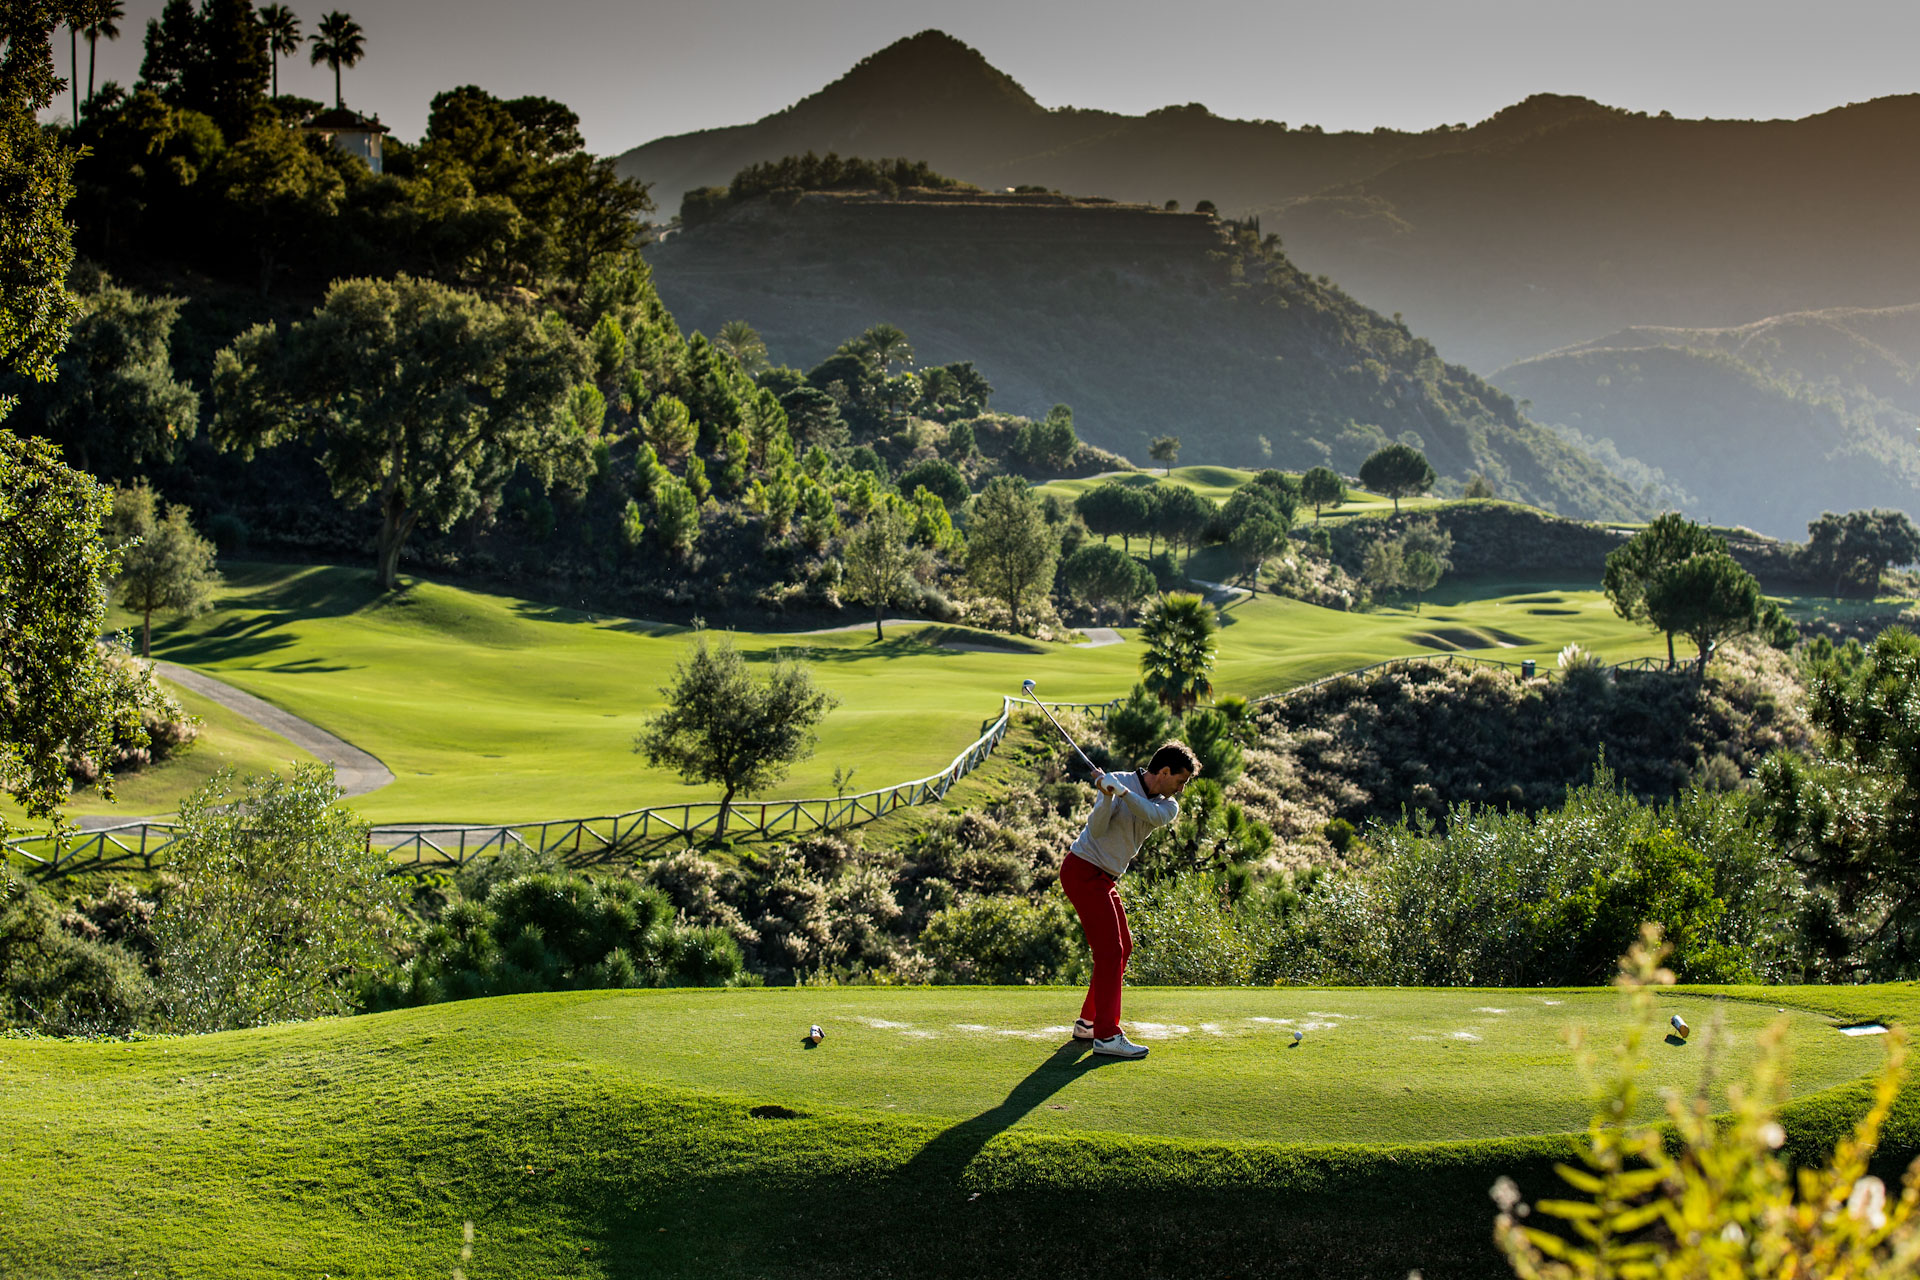 Stunning setting for La Zagaleta Golf Club, Costa del Sol, Spain